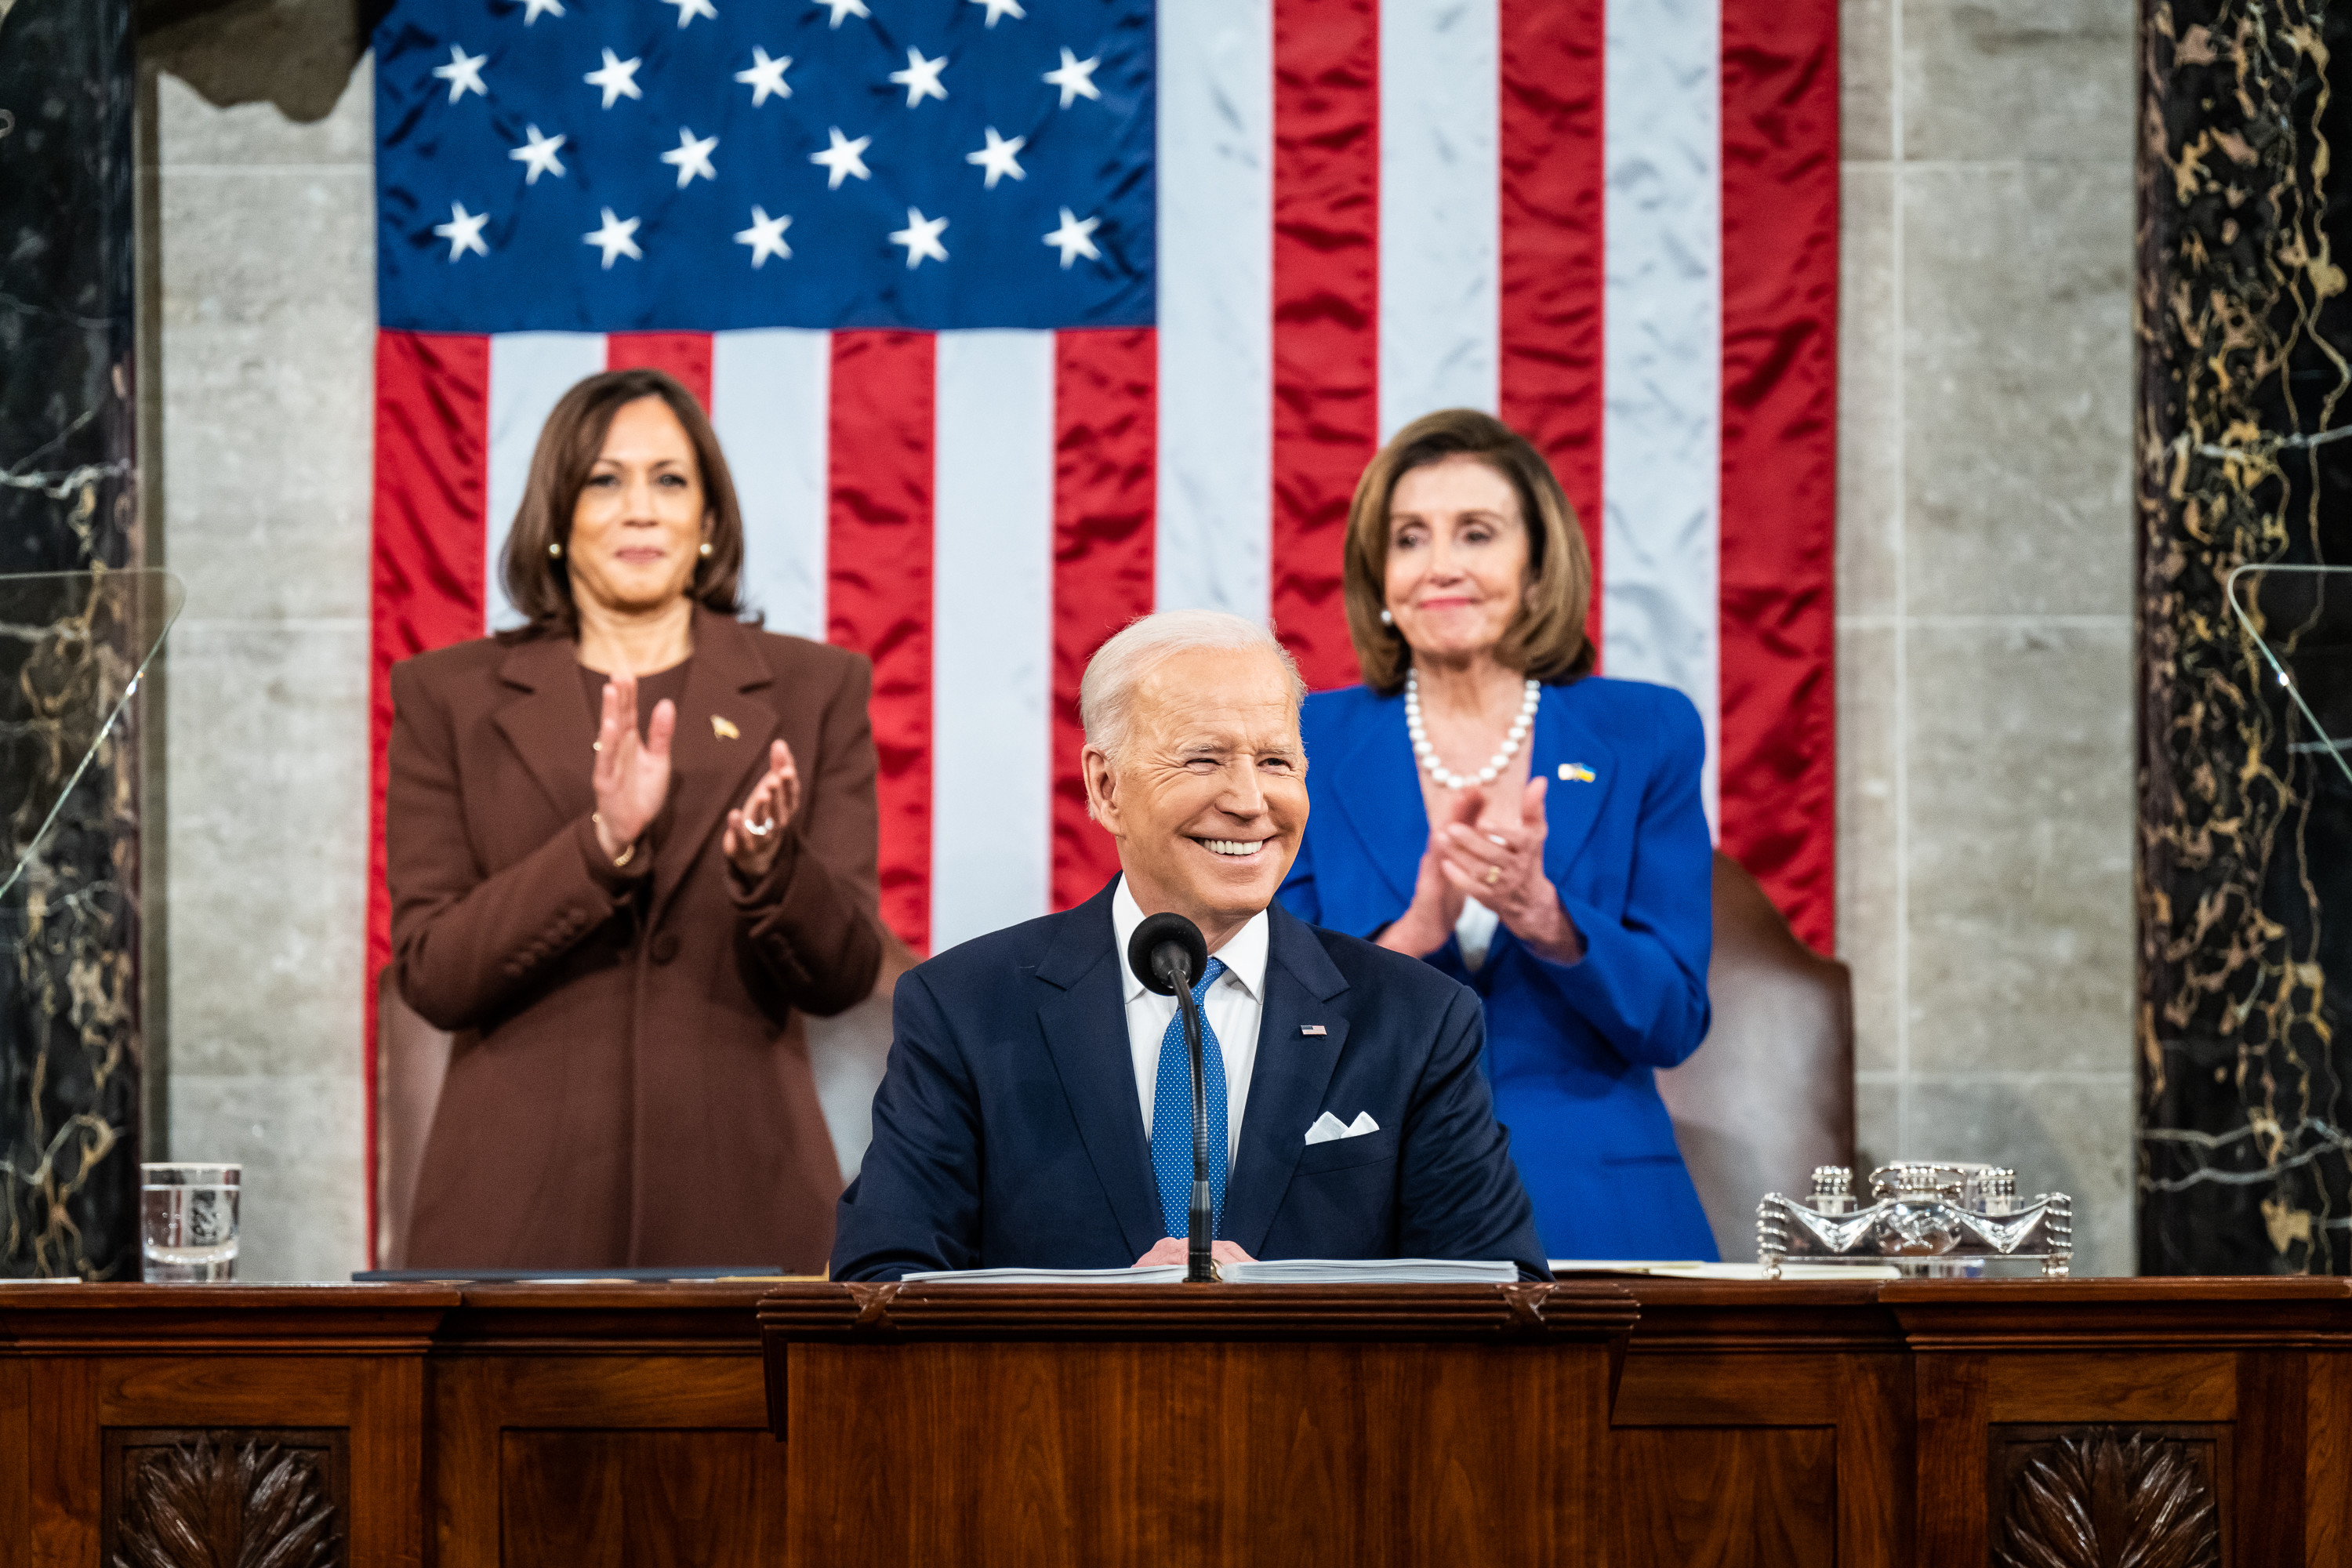 Joe Biden with Kamala Harris (left) and Nancy Pelossi (right), speaking to the Congress.